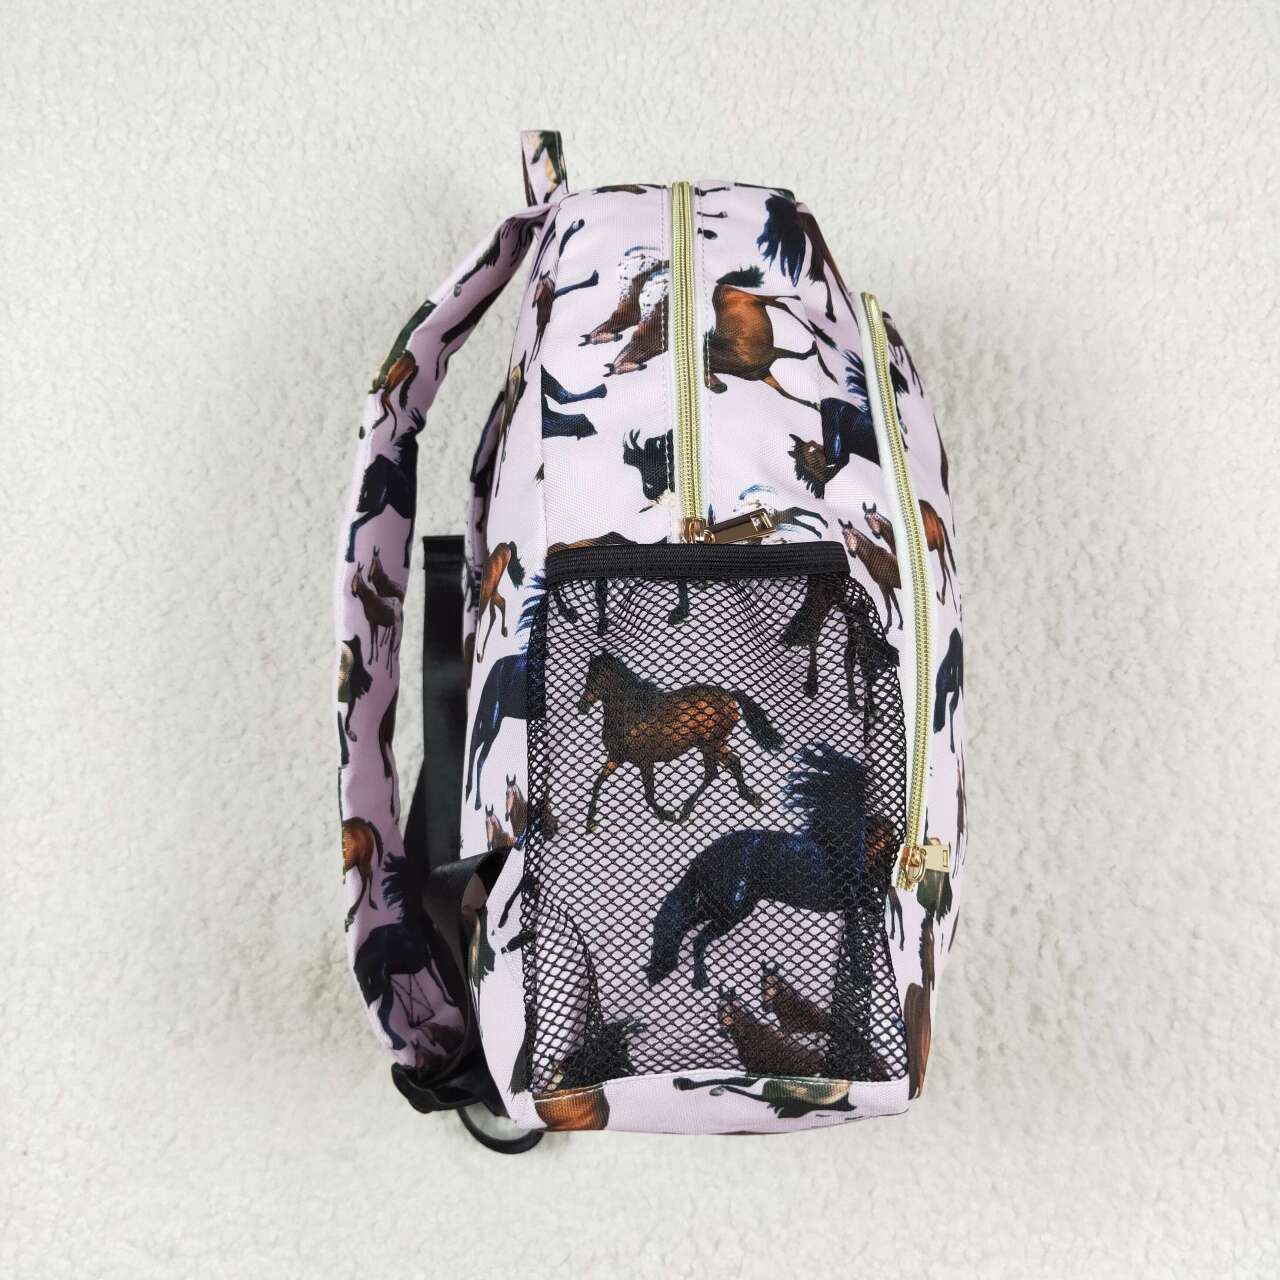 RTS no moq BA0124  Horse light purple backpack